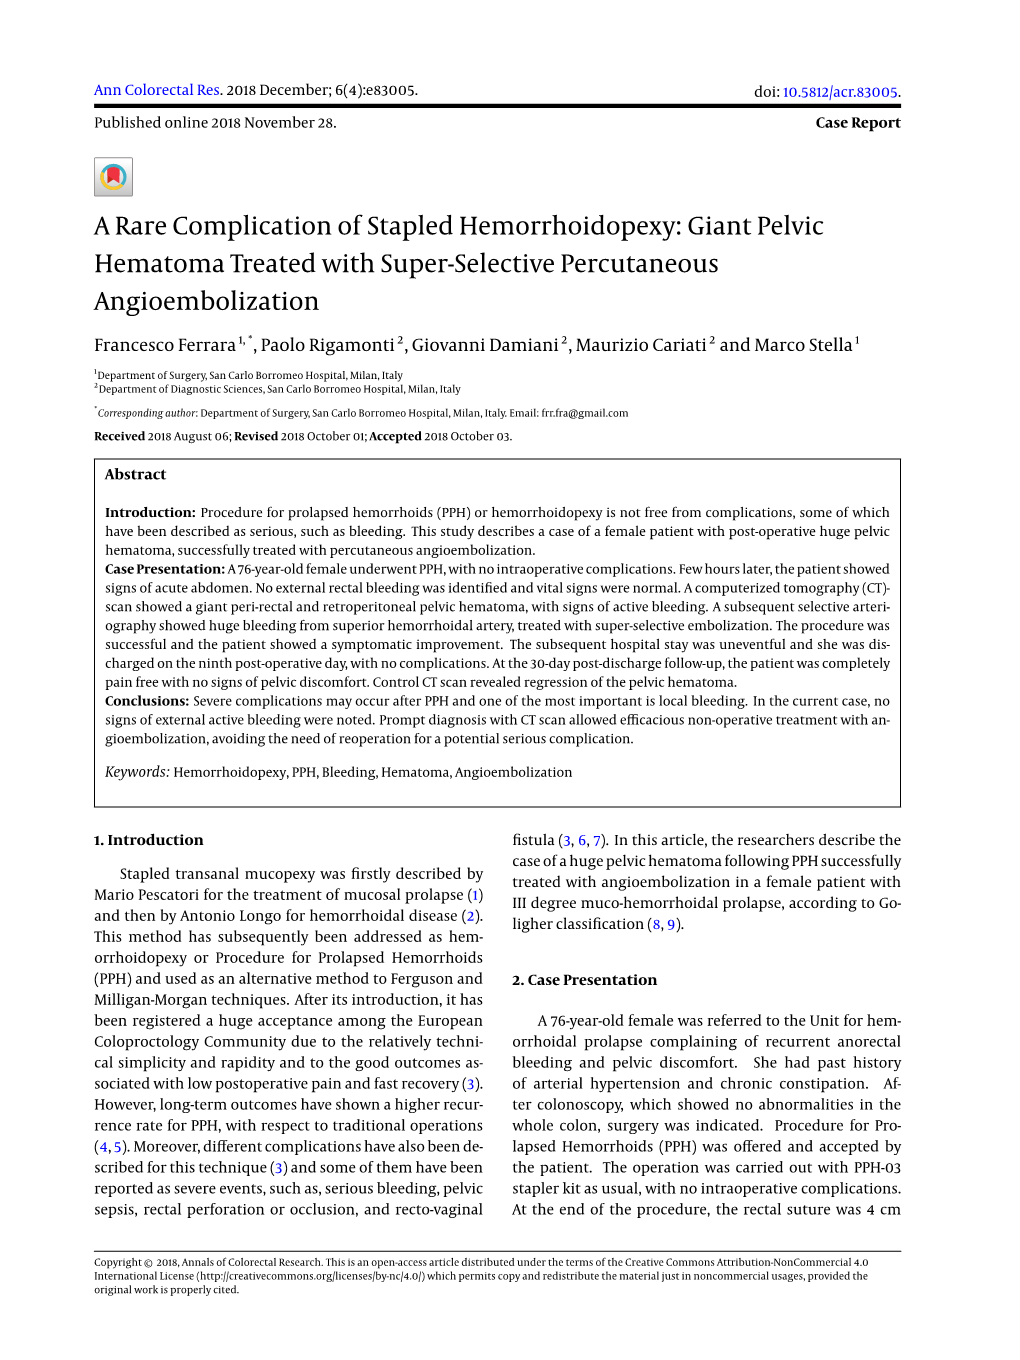 A Rare Complication of Stapled Hemorrhoidopexy: Giant Pelvic Hematoma Treated with Super-Selective Percutaneous Angioembolization